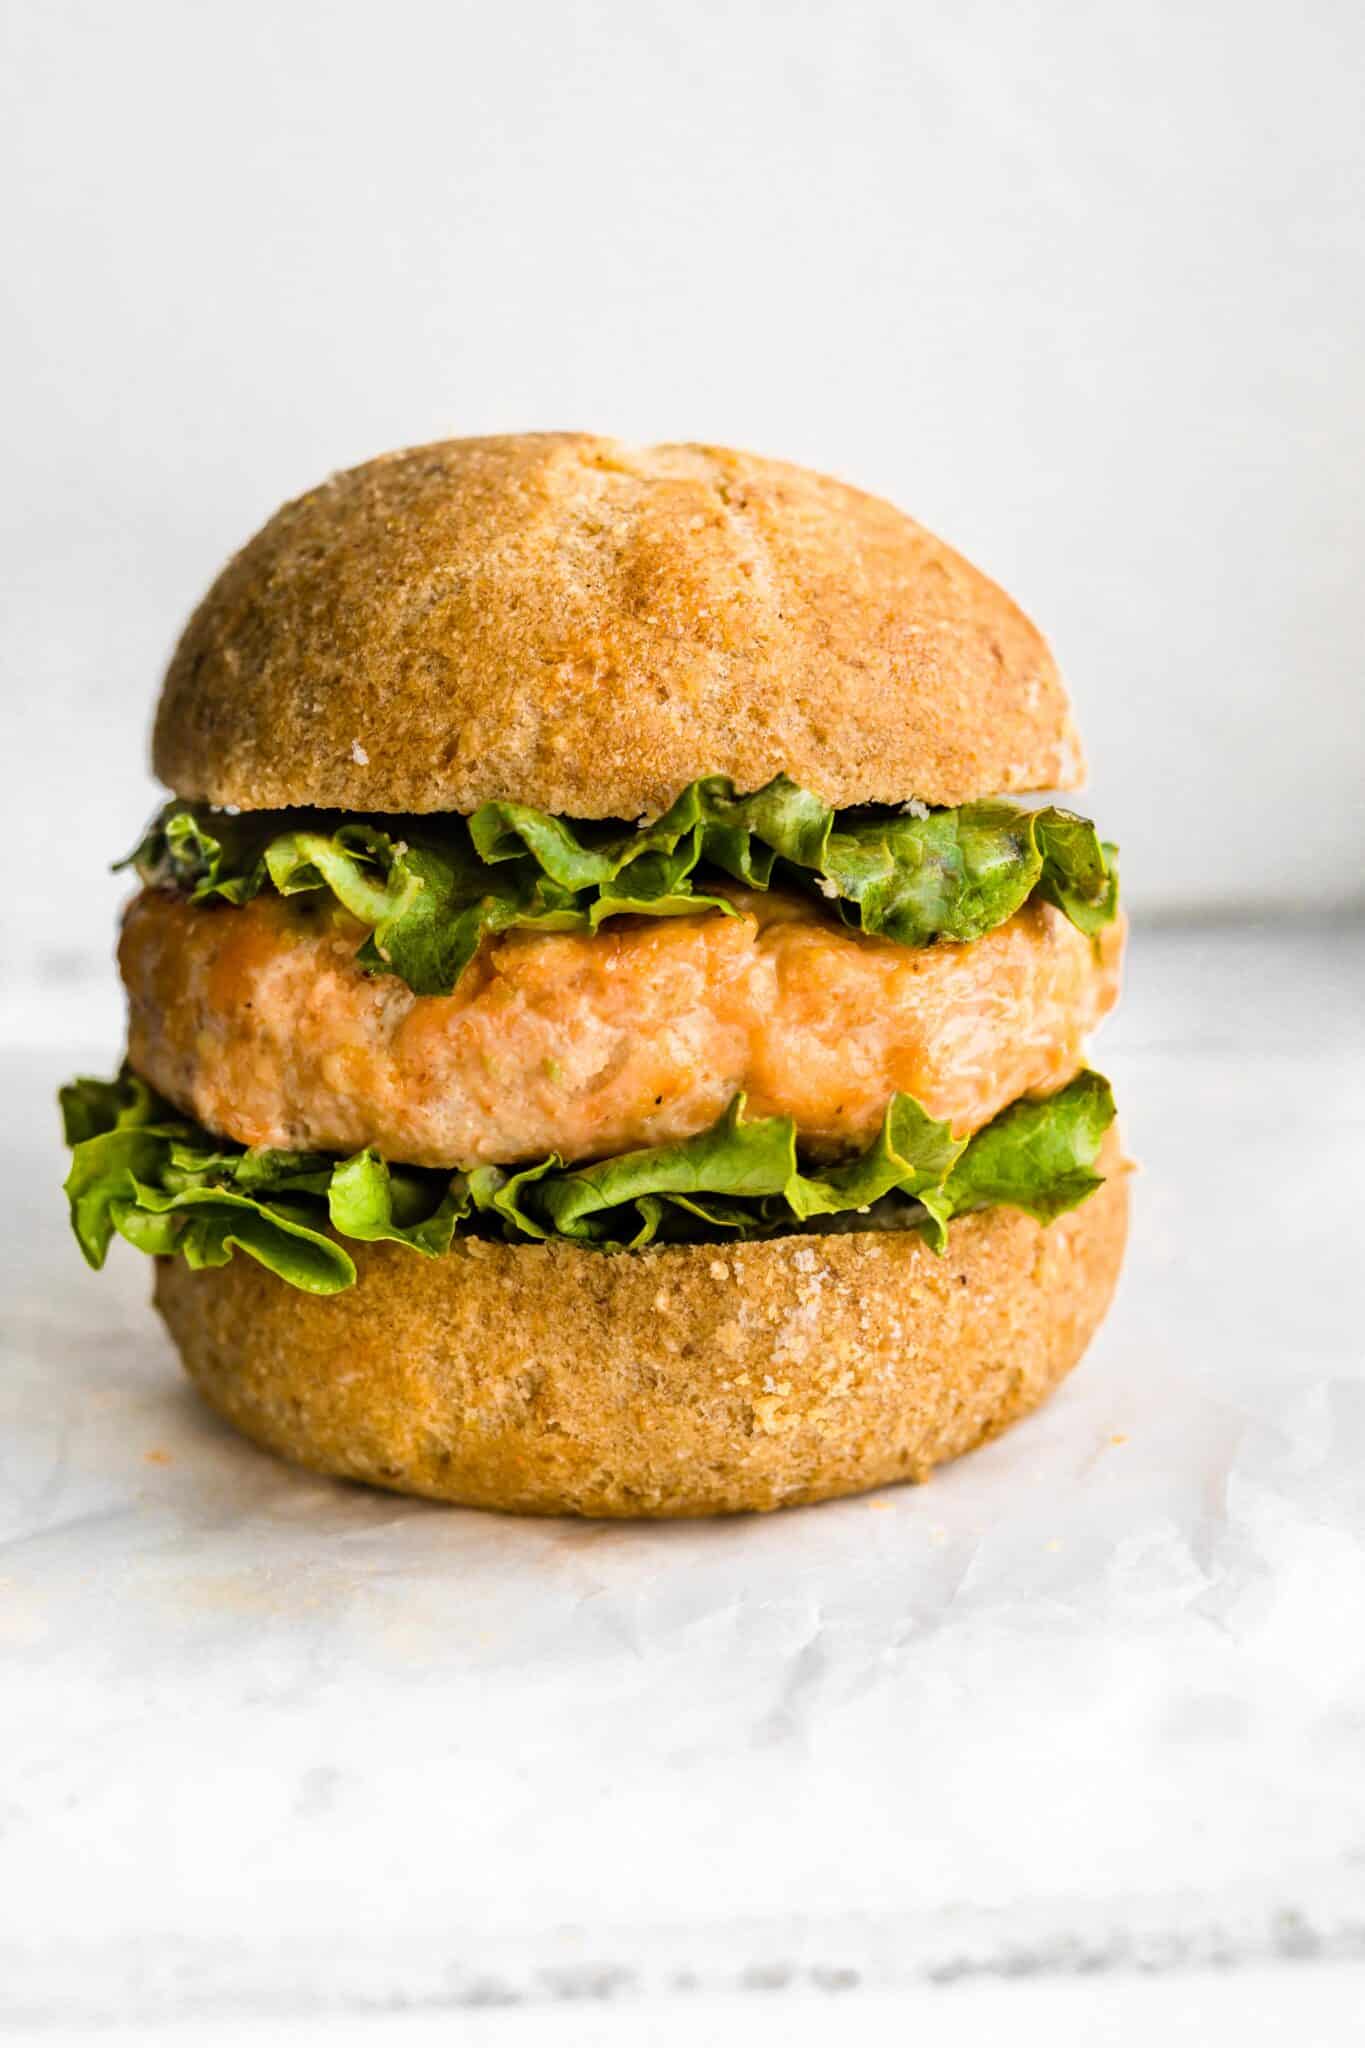 A gluten free hamburger bun with a salmon burger and lettuce.